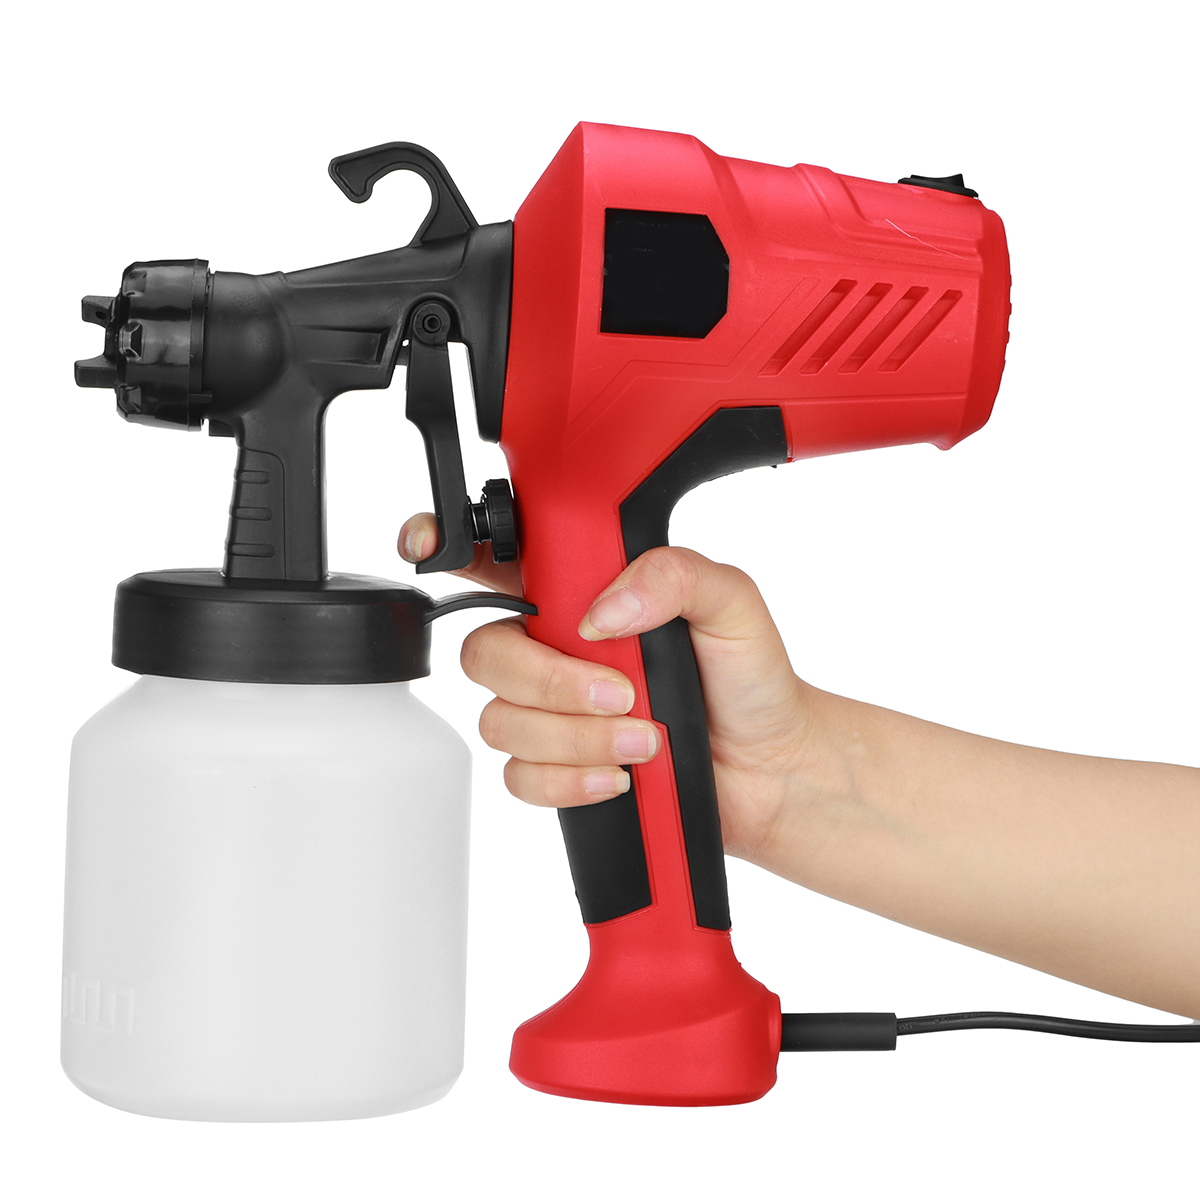 800ml-Electric-Paint-Spray-Guns-Disinfectant-Sprayer-Household-Portable-Disinfecting-Spray-DIY-Paint-1866548-16